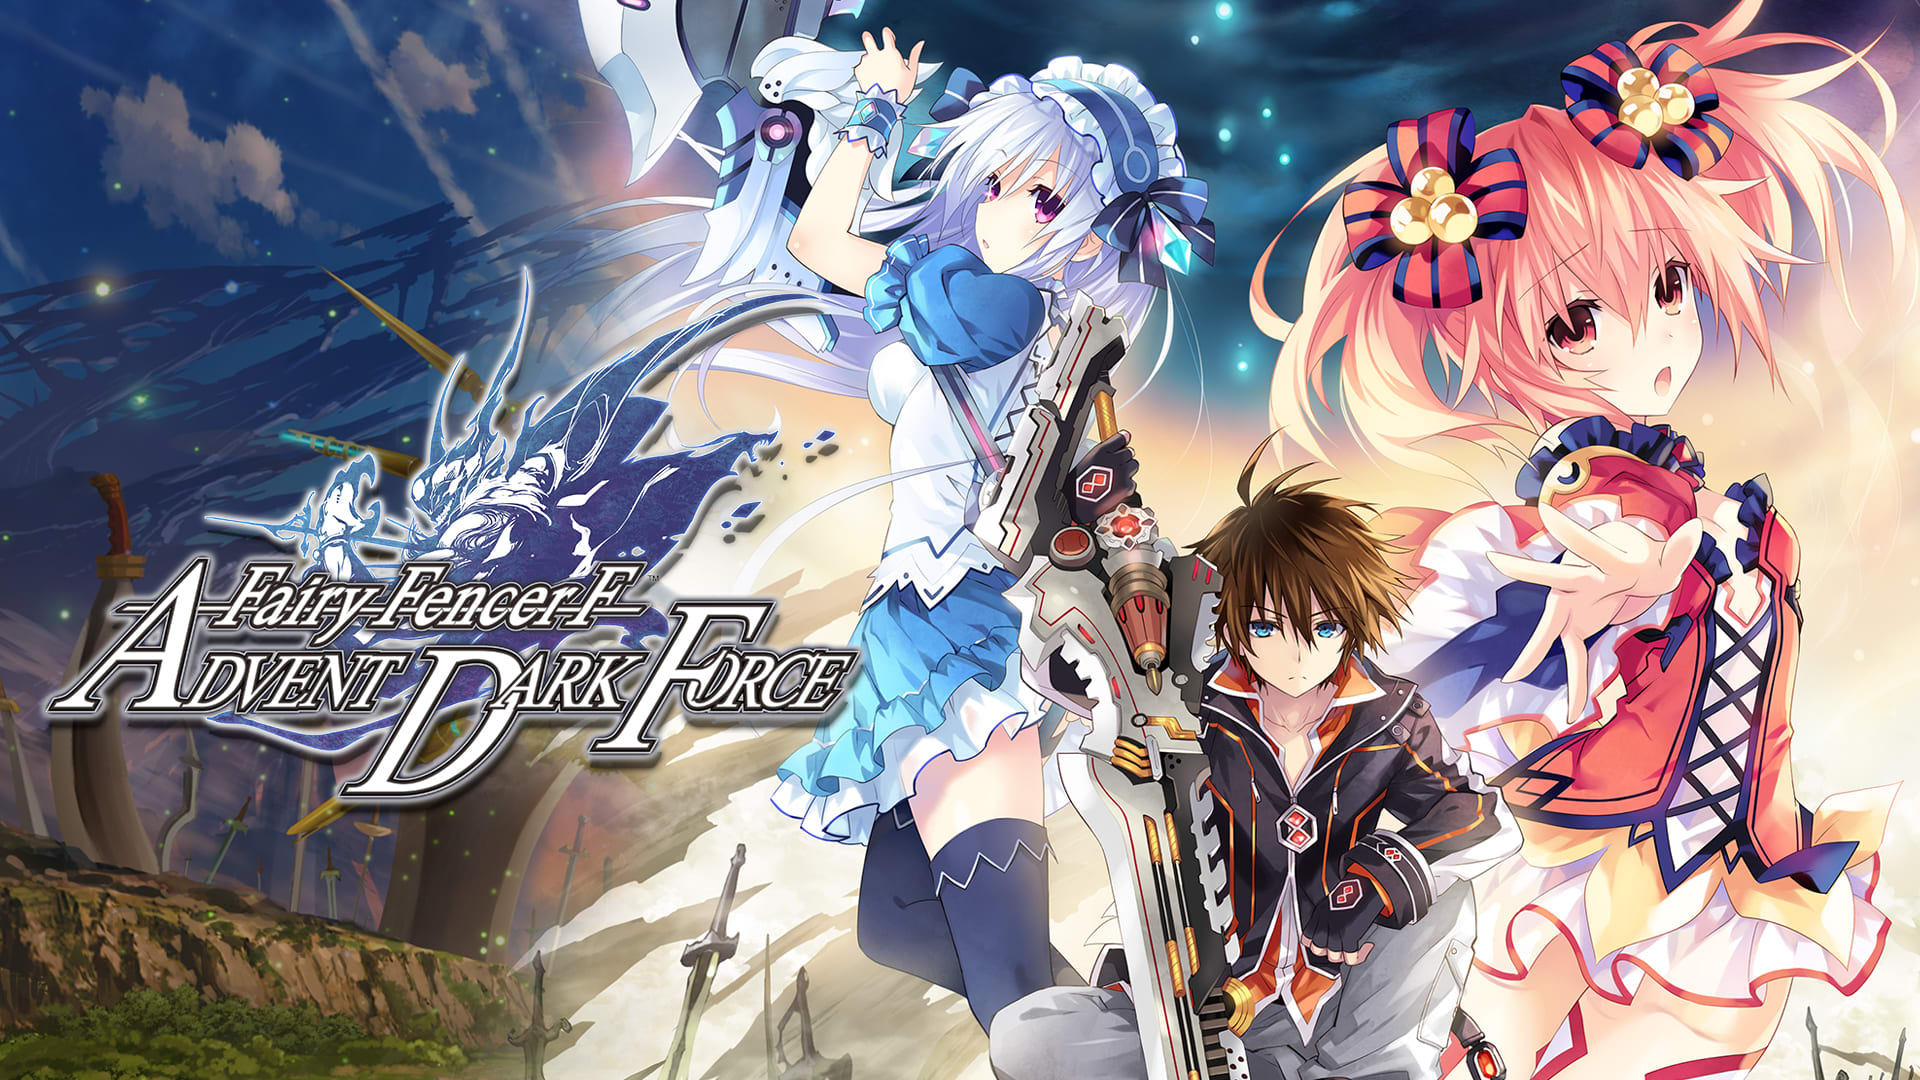 Fairy Fencer F™: Advent Dark Force